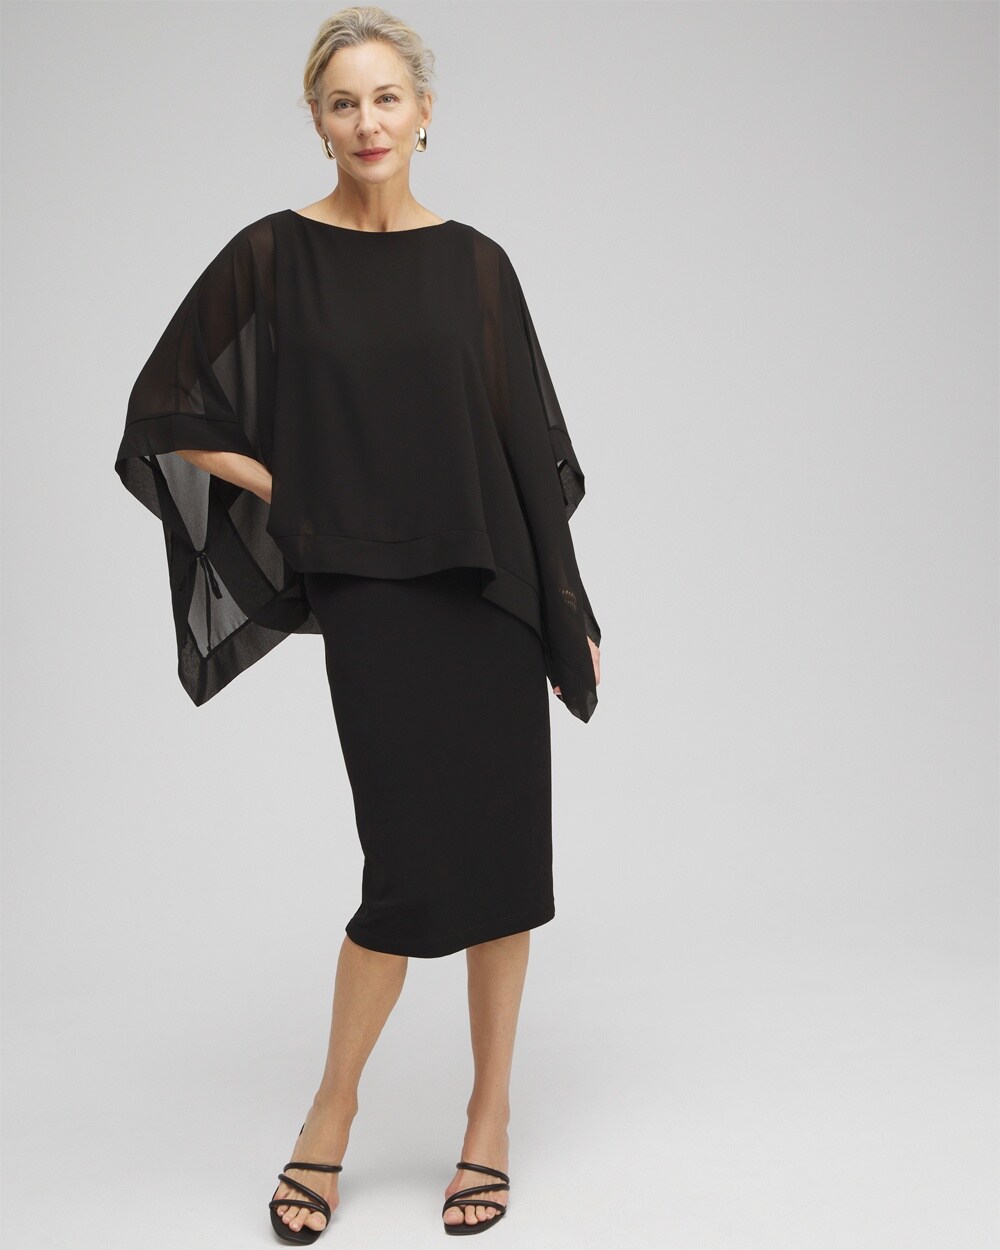 Chico's Wrinkle-free Travelers Chiffon Overlay Dress In Black Size 8/10 |  Travel Clothing